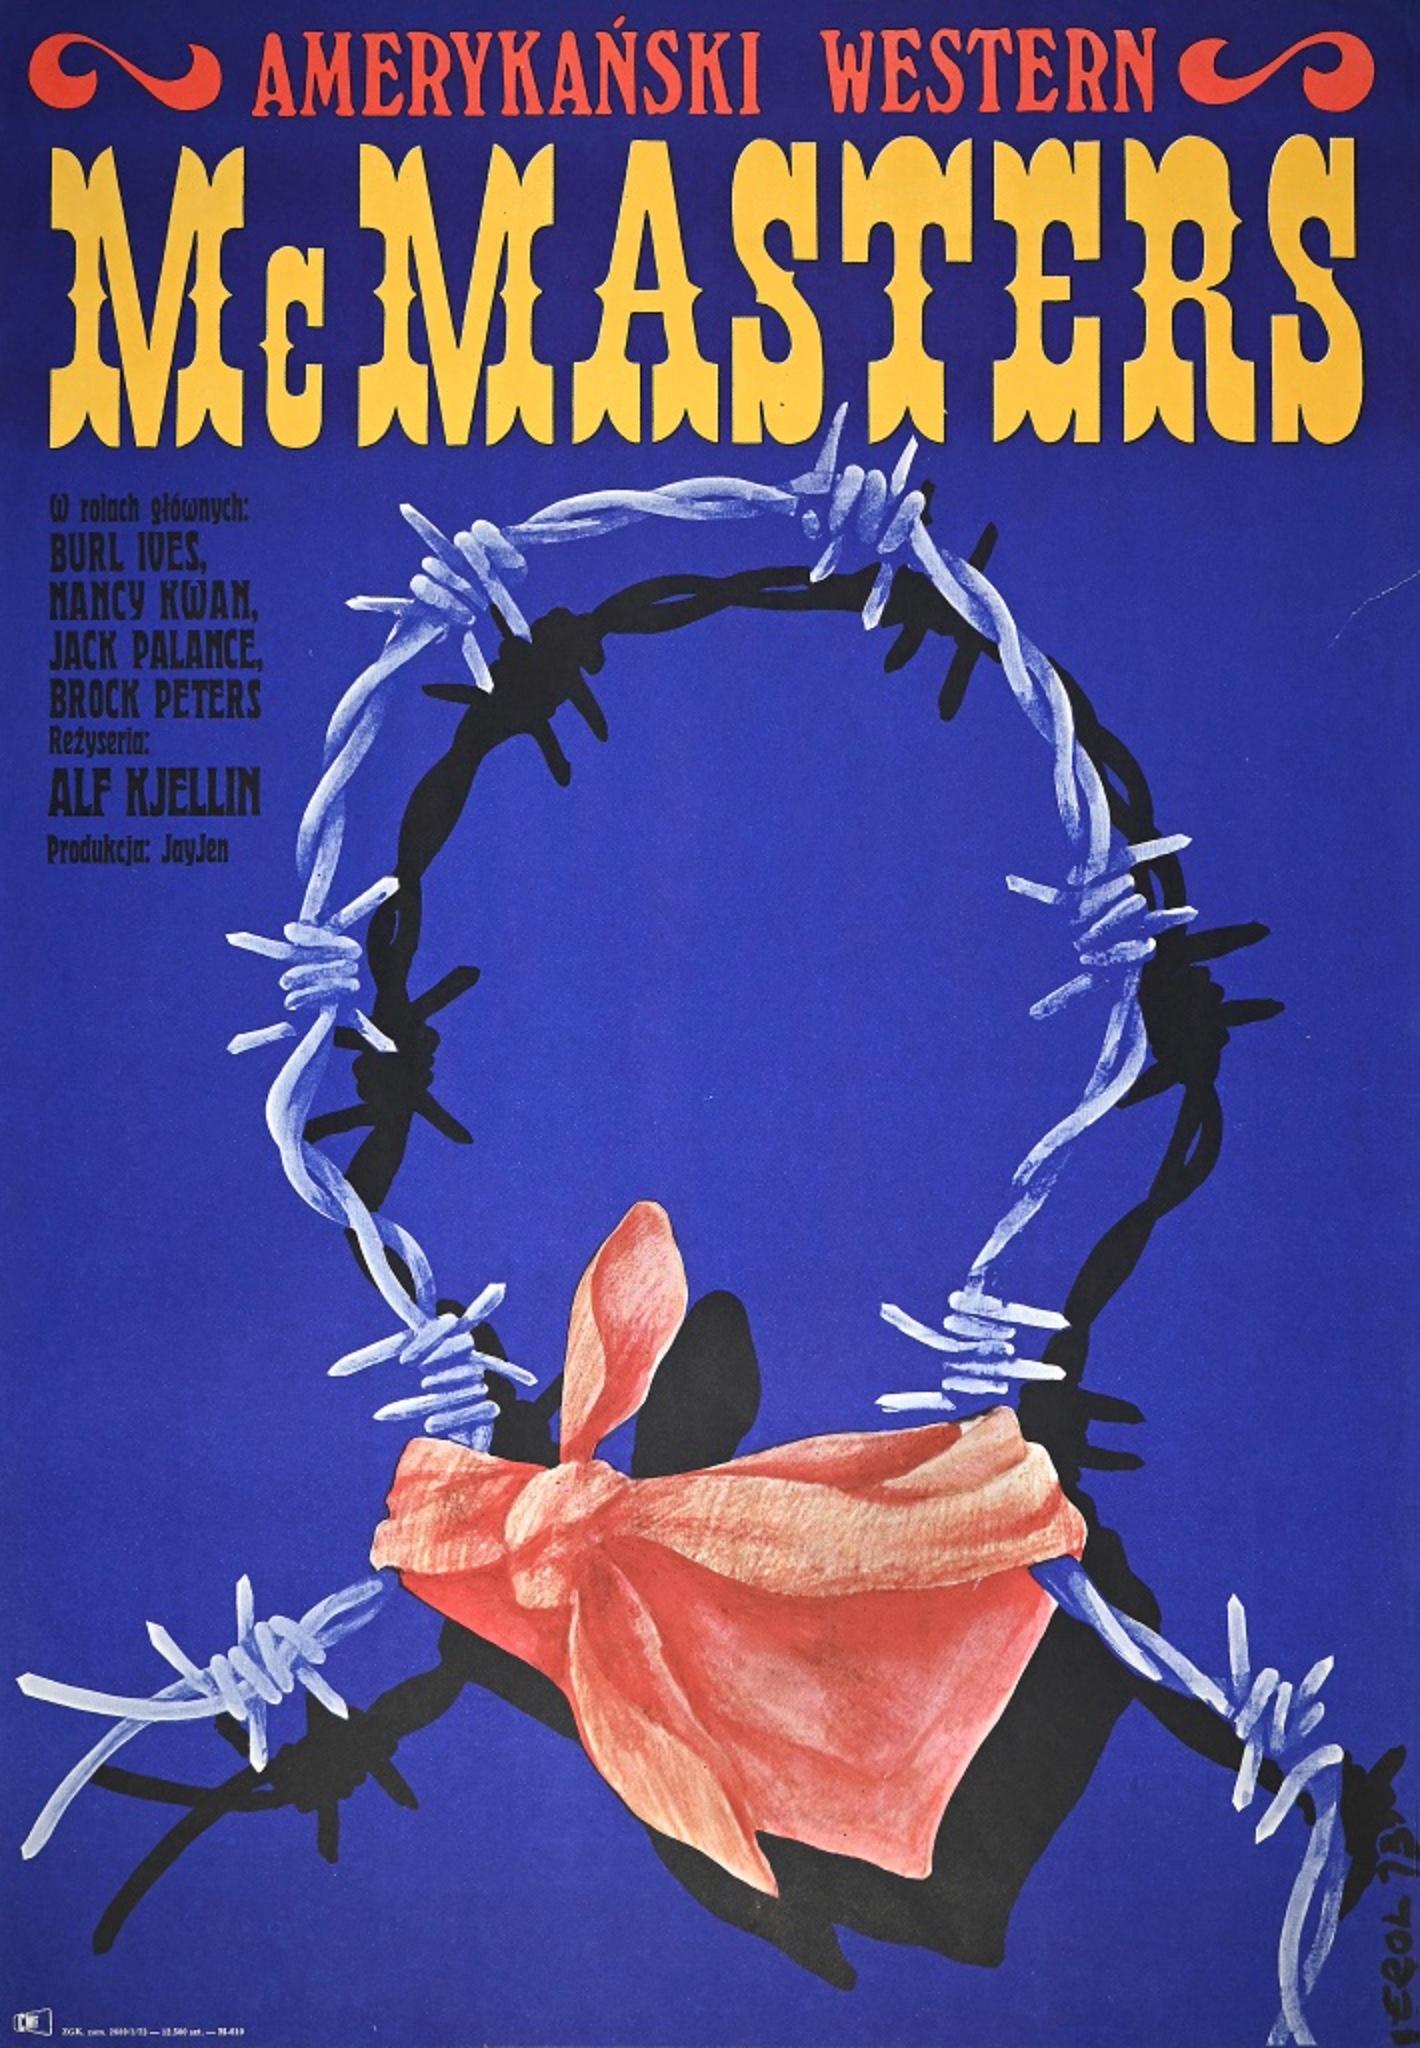 Unknown Figurative Print - Western - Vintage Poster - 1973